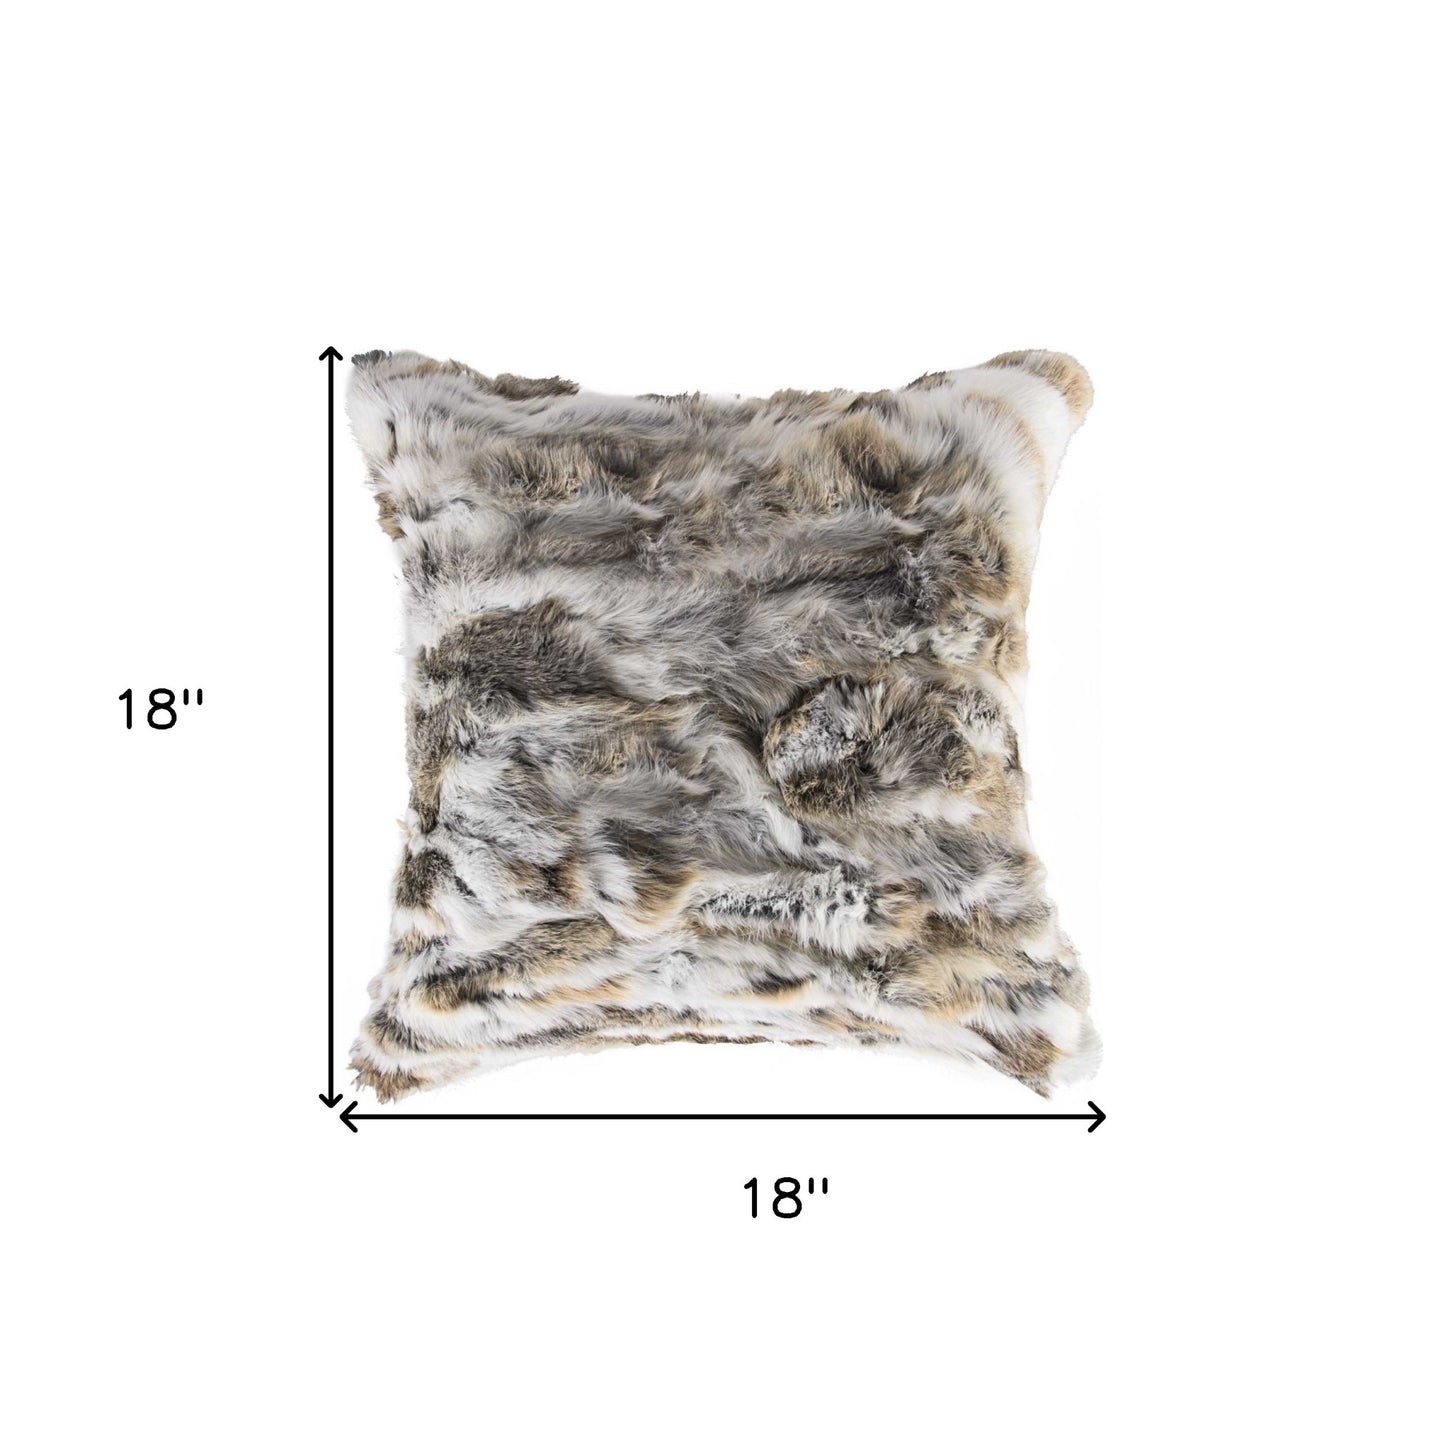 5" X 18" X 18" 100% Natural Rabbit Fur Tan And White Pillow